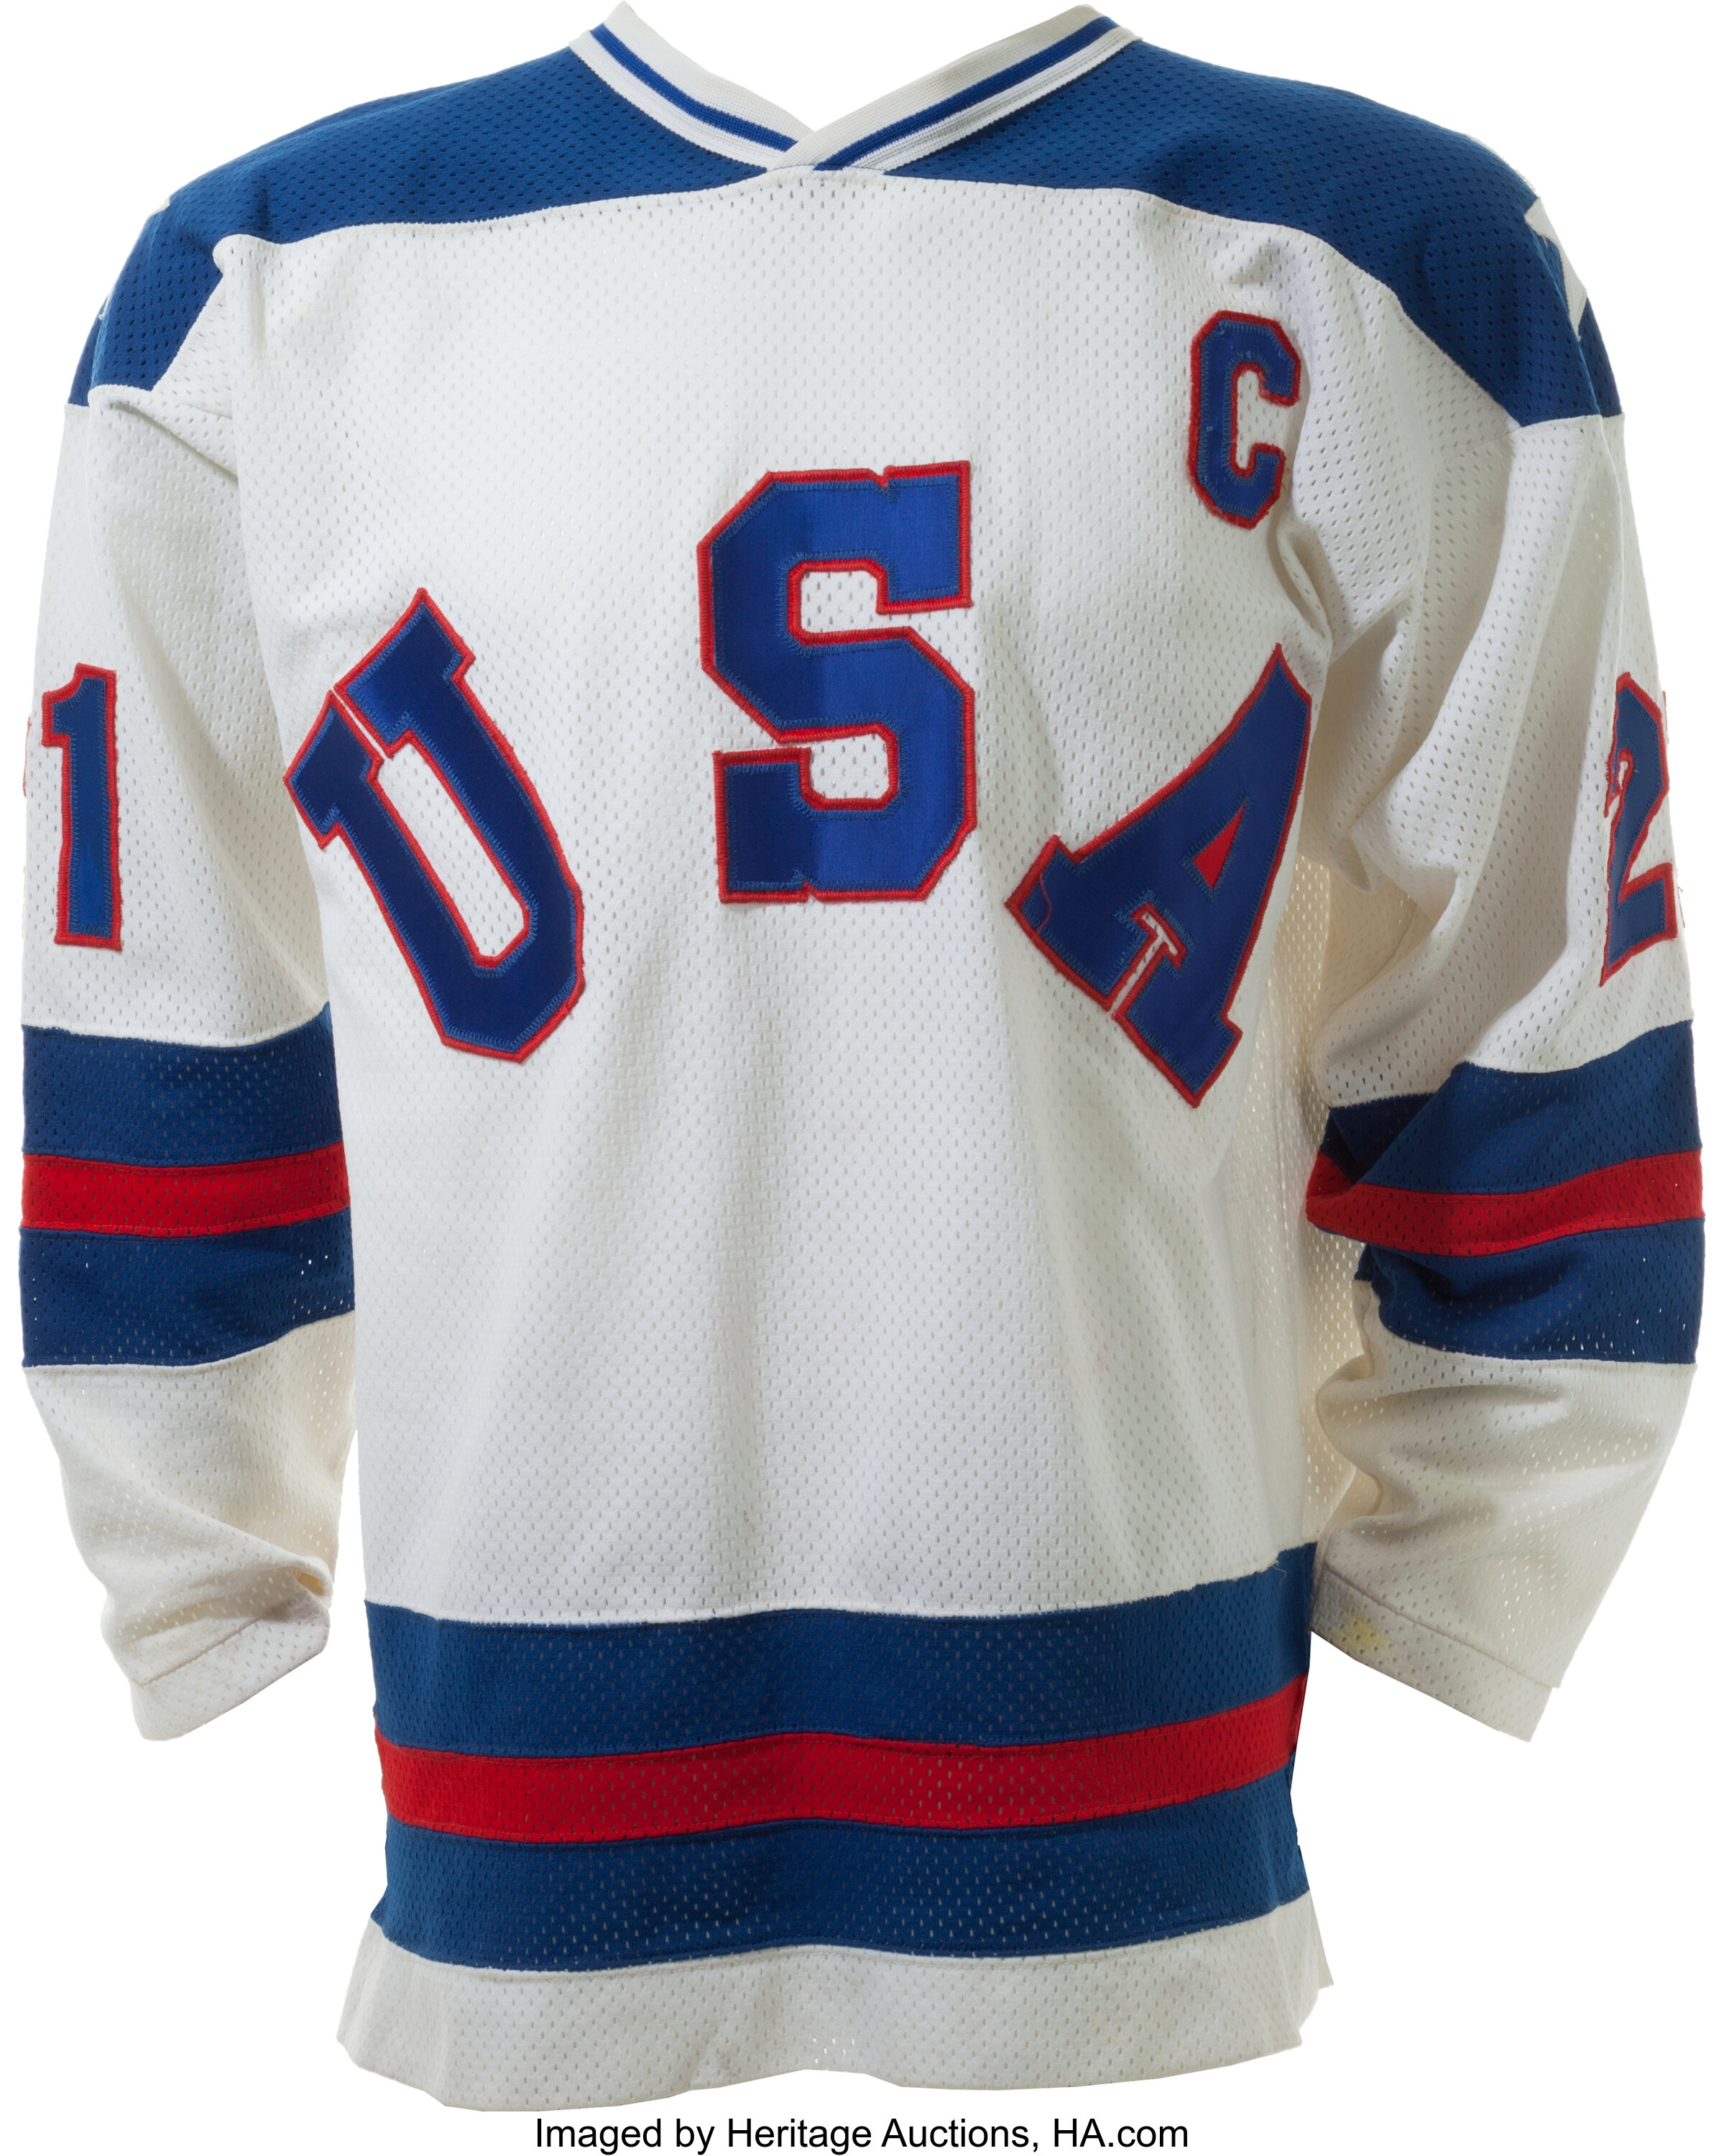 Team U.S.A signed 1980 jersey - Sportsworld Largest Memorabilia